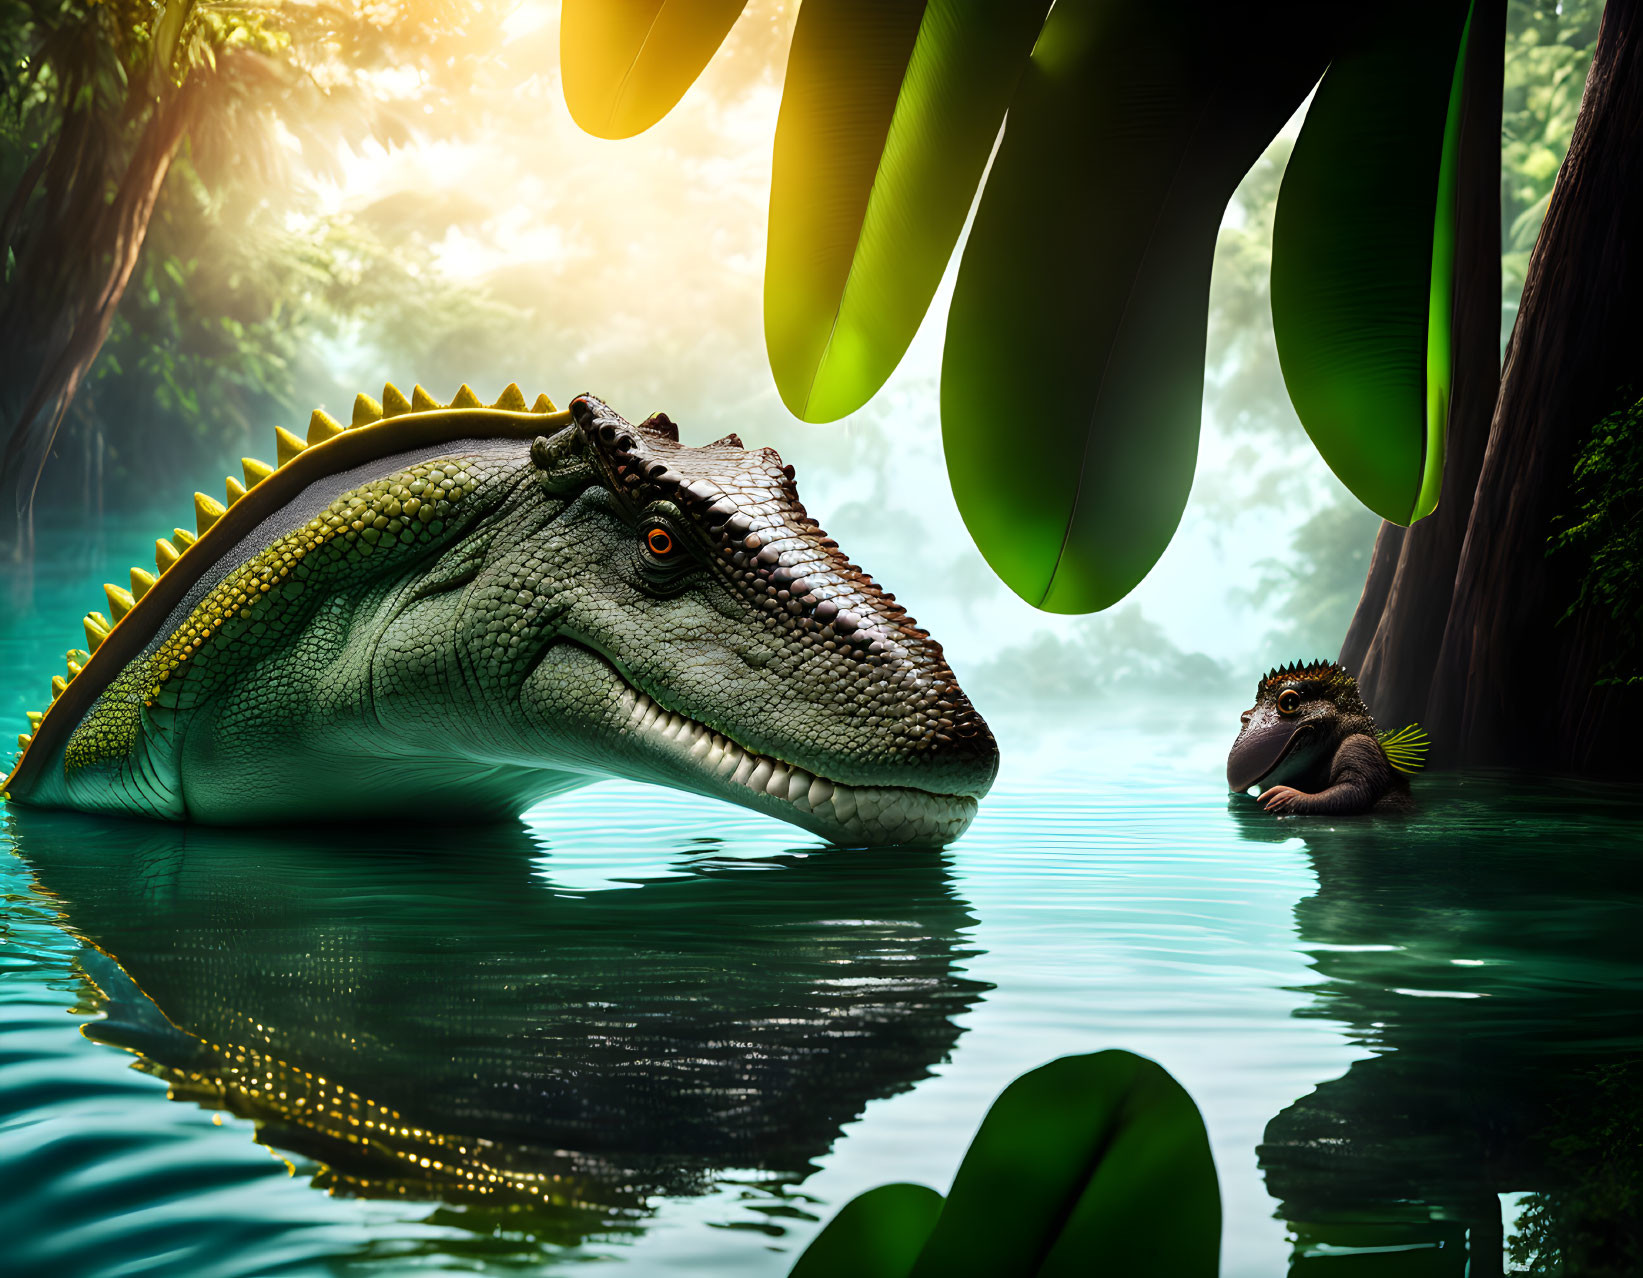 Two Crocodiles in Serene Jungle Waterway